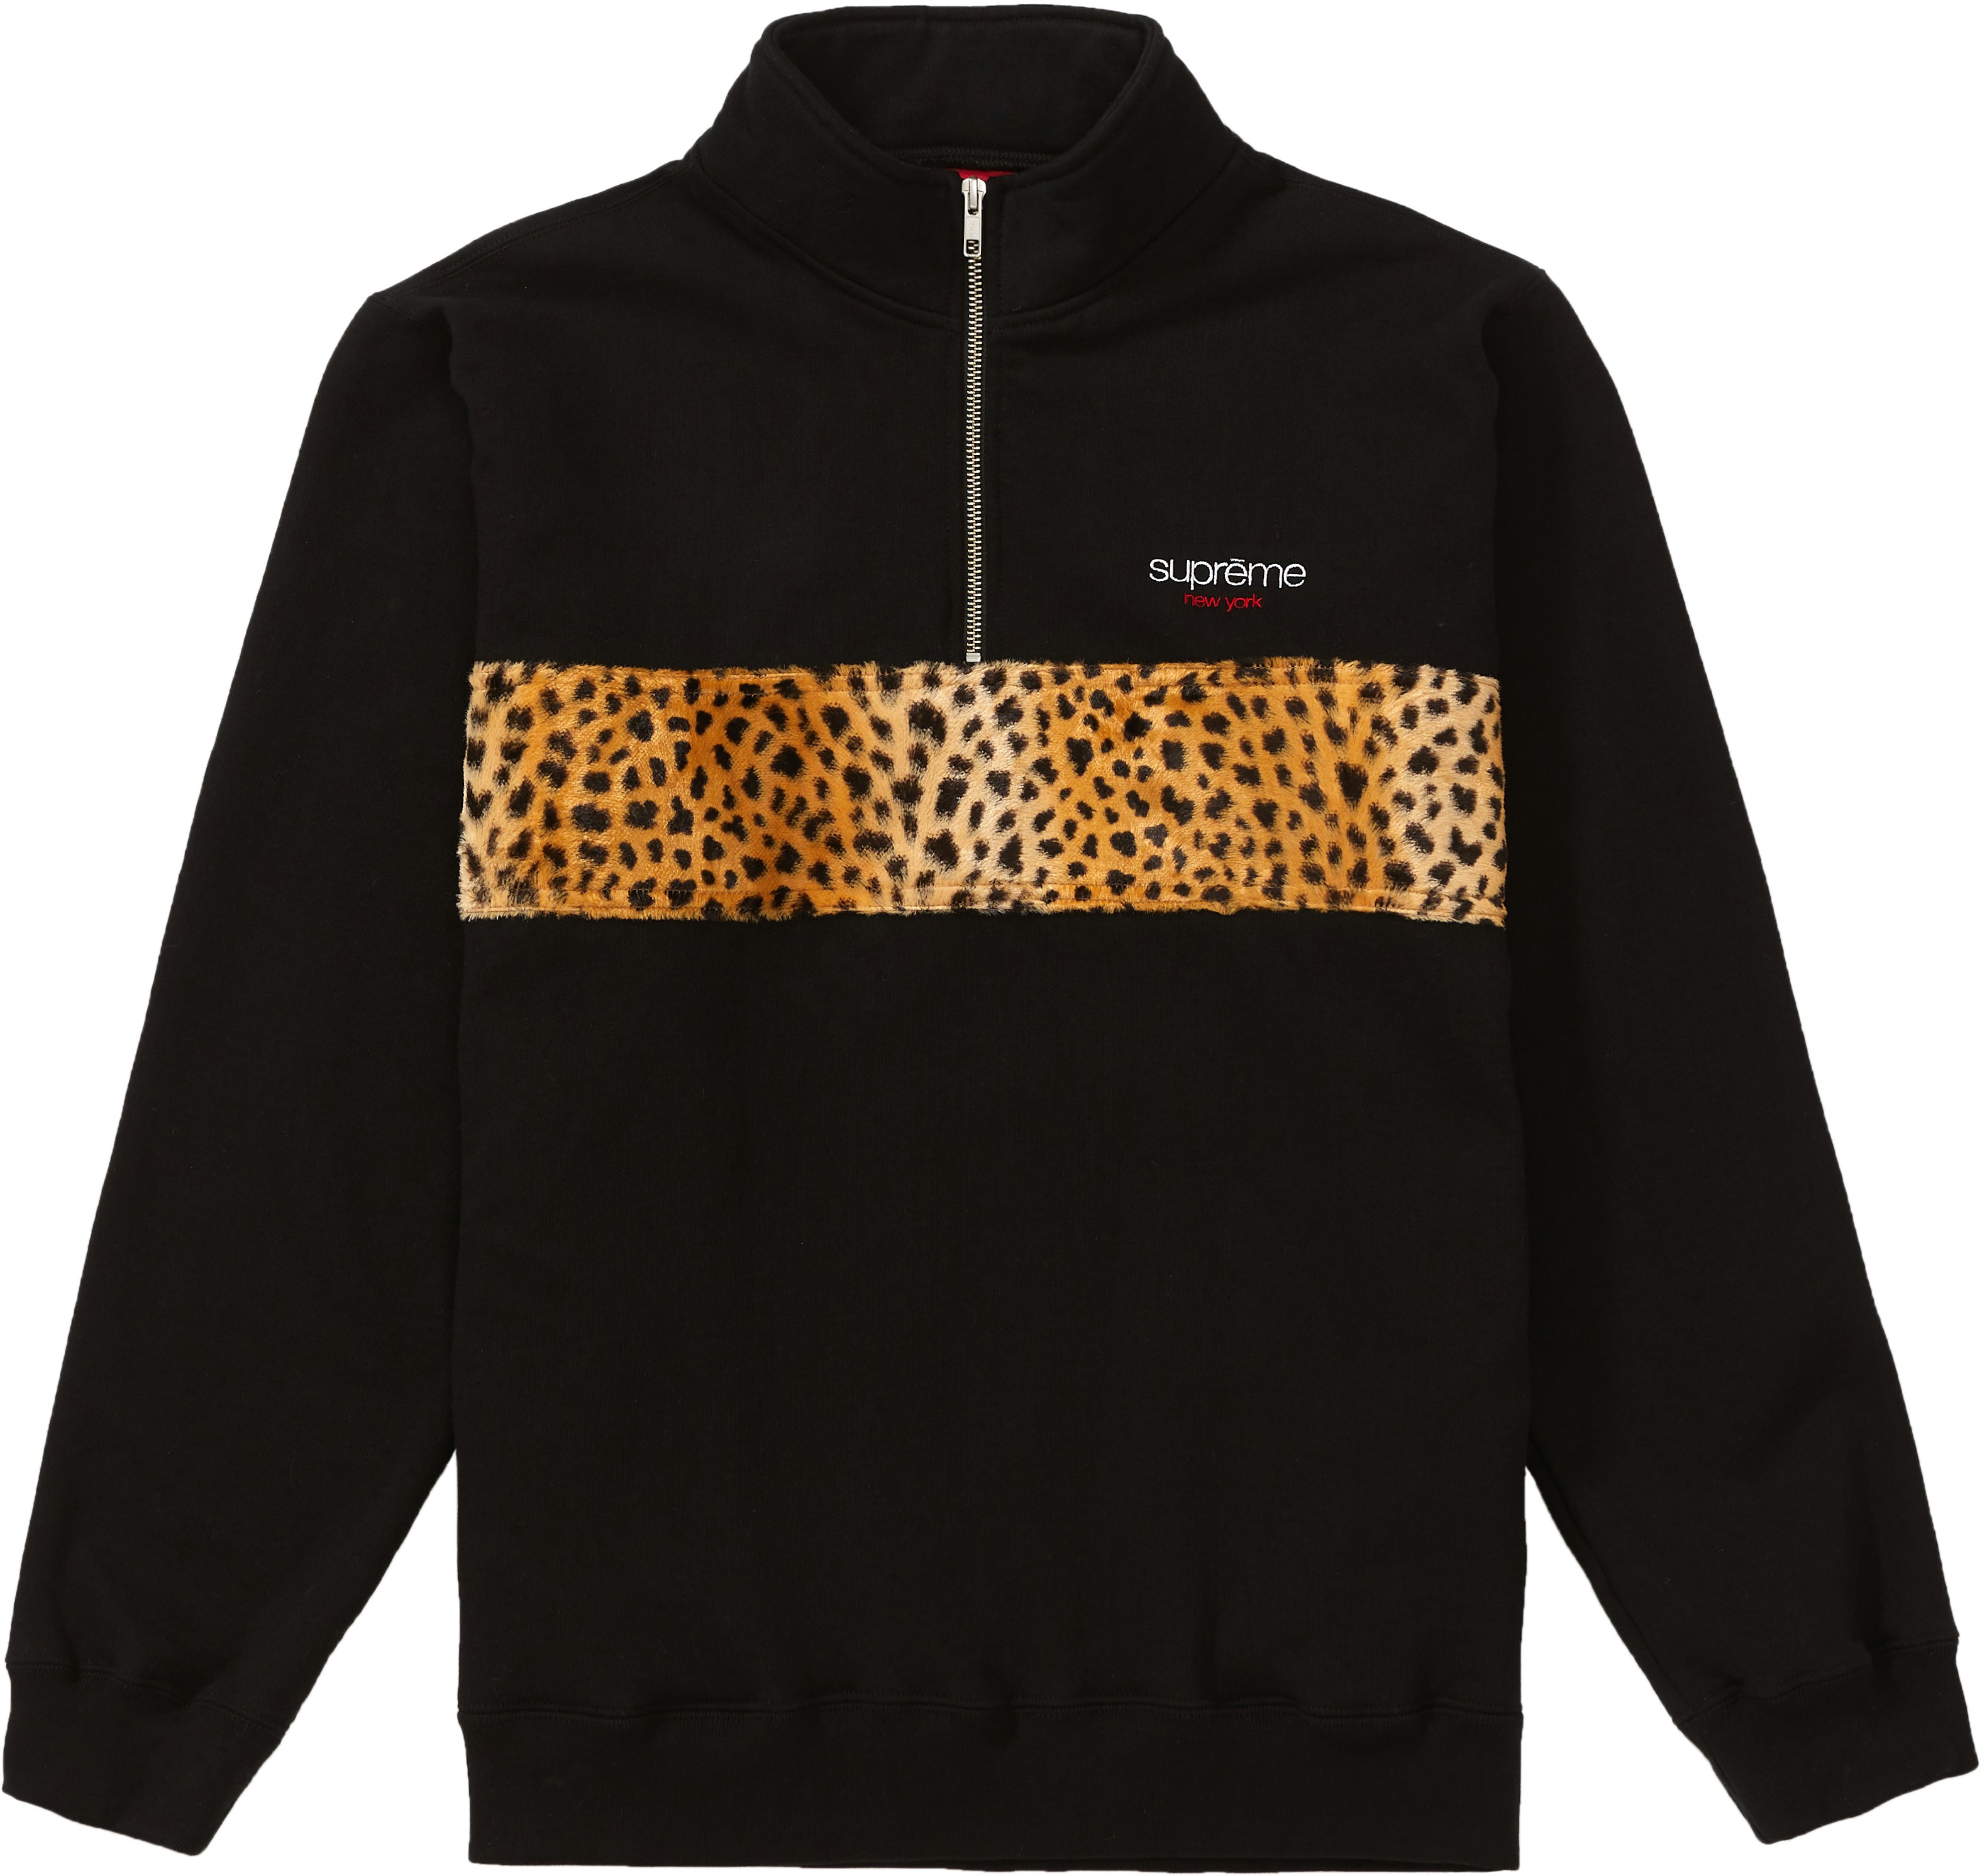 Supreme Leopard Panel Half Zip Sweatshirt Black - Novelship